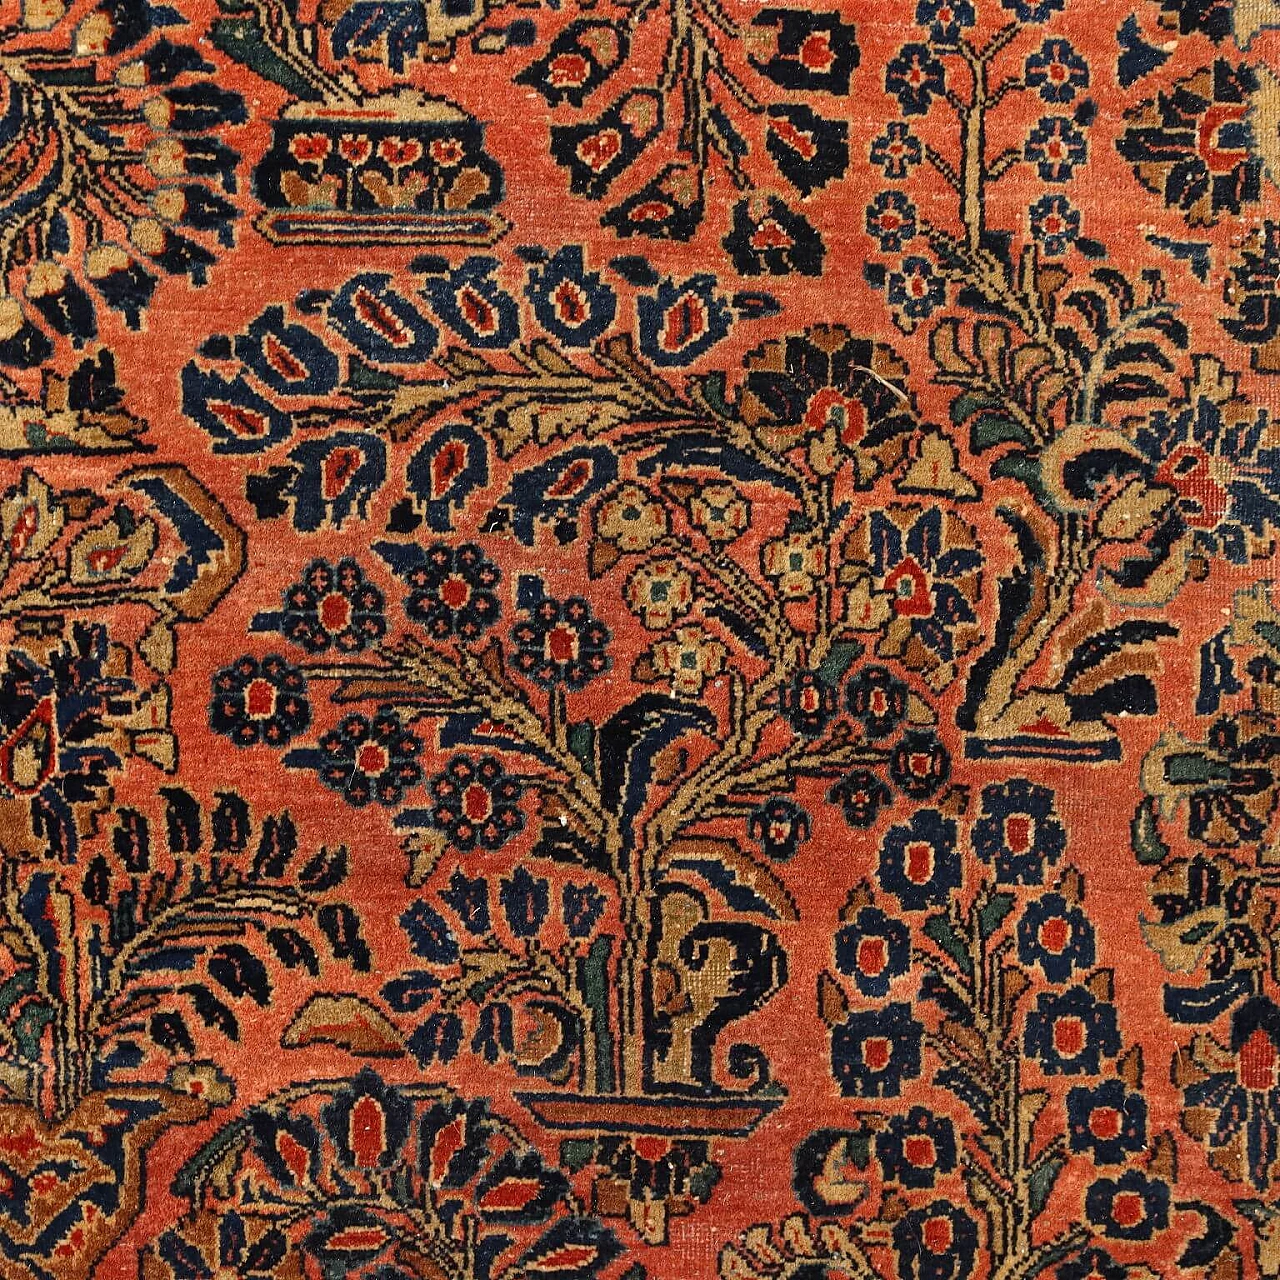 Iranian Saruk American cotton and wool carpet 4